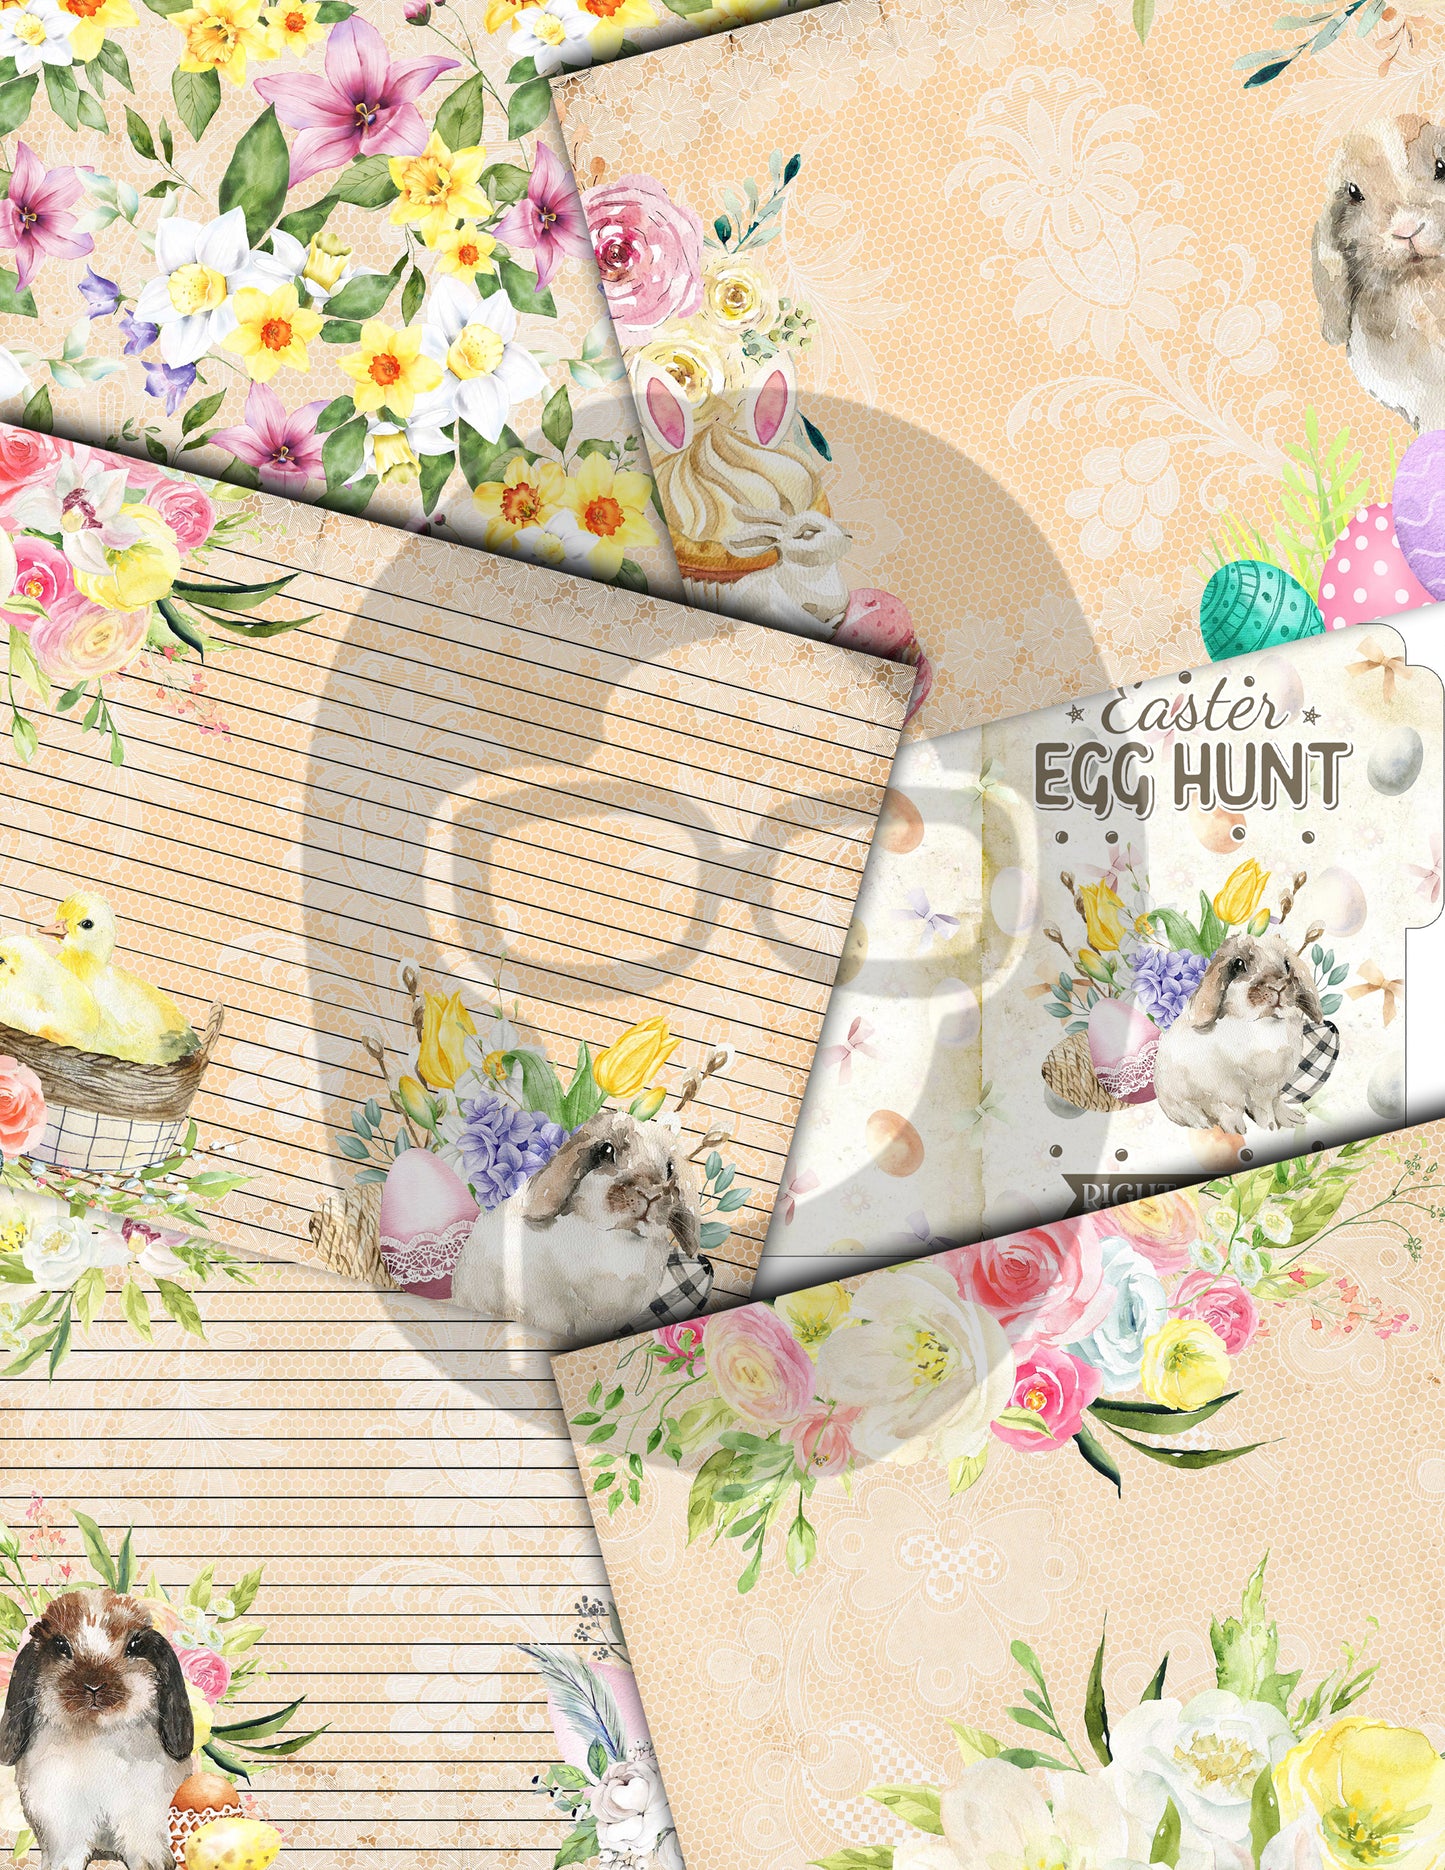 Easter Junk Journal, Spring Journal Kit -40pg Digital Download- Pastel Easter, Lined Journal Pages, Easter Ephemera, Eggs, Rabbit, Quotes